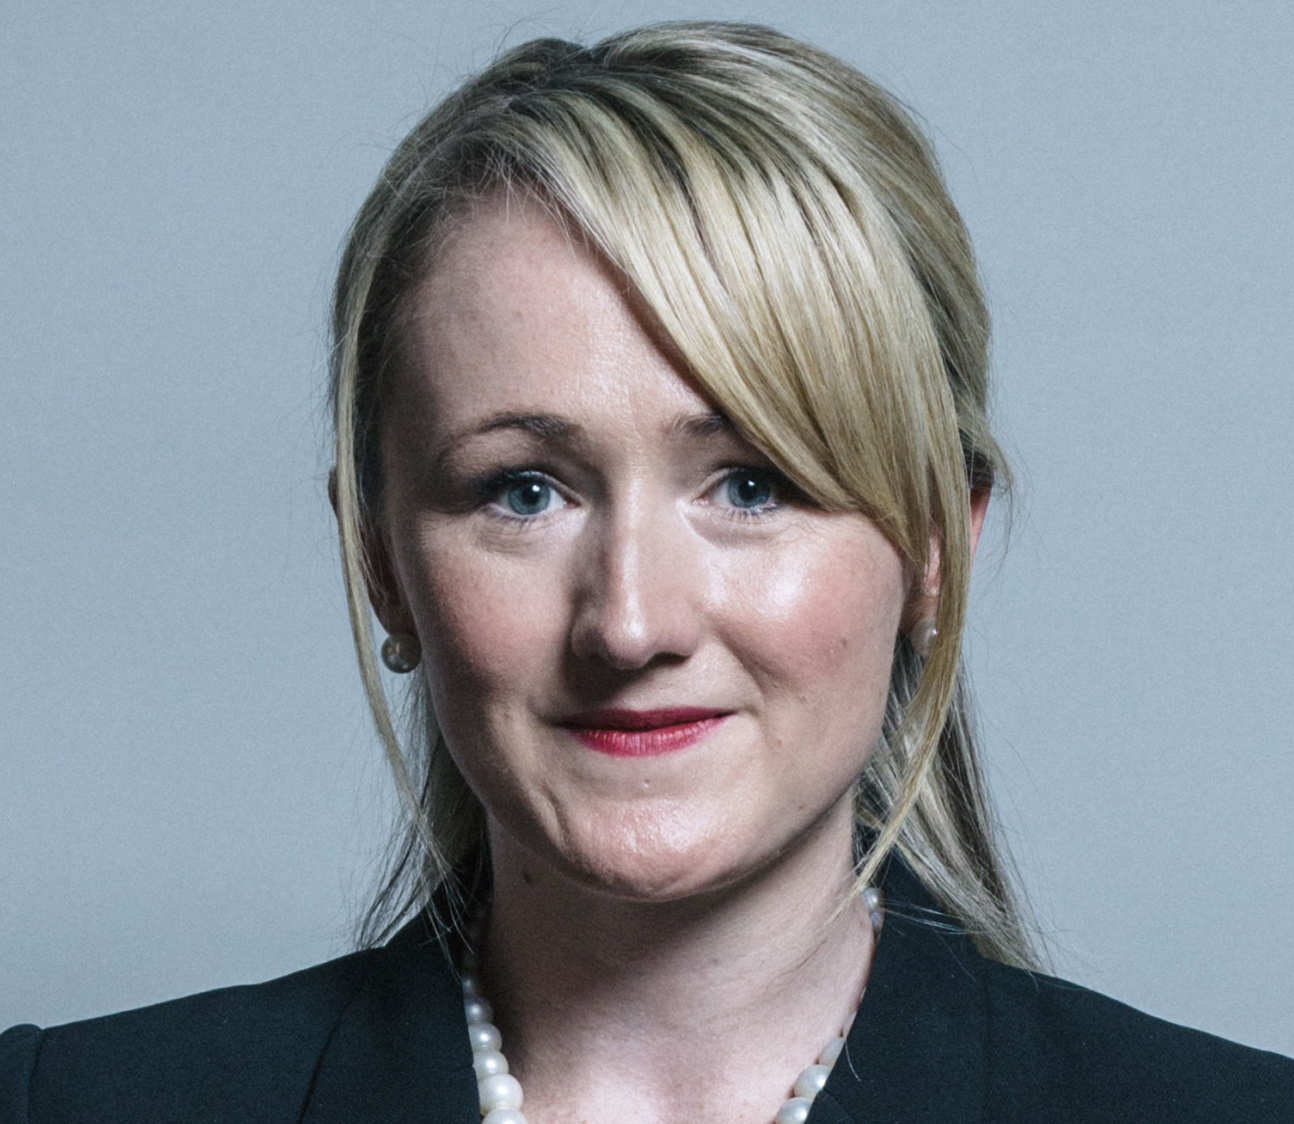 Rebecca Long-Bailey MP